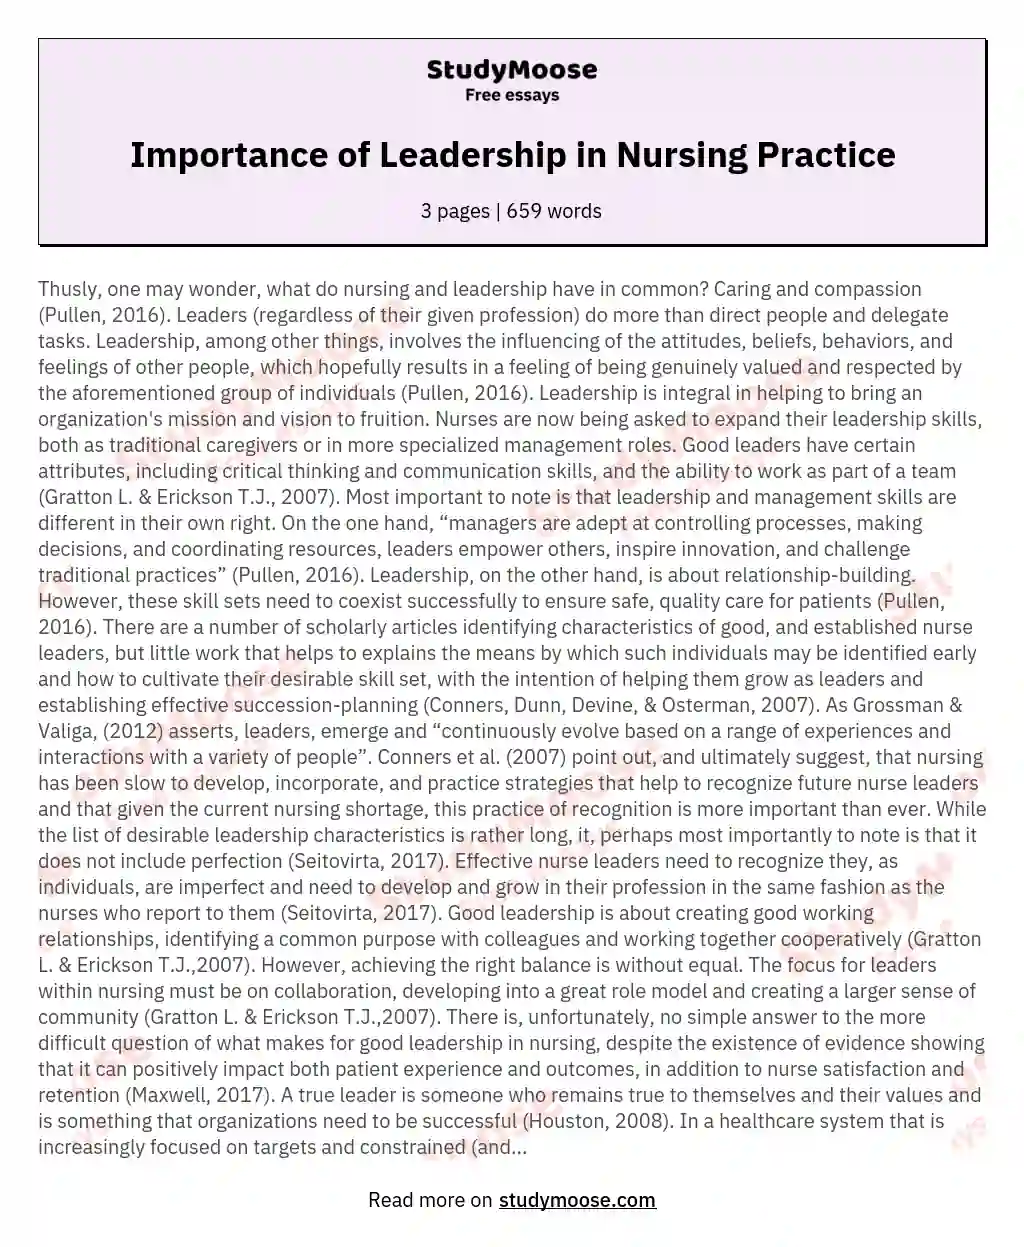 Importance of Leadership in Nursing Practice essay